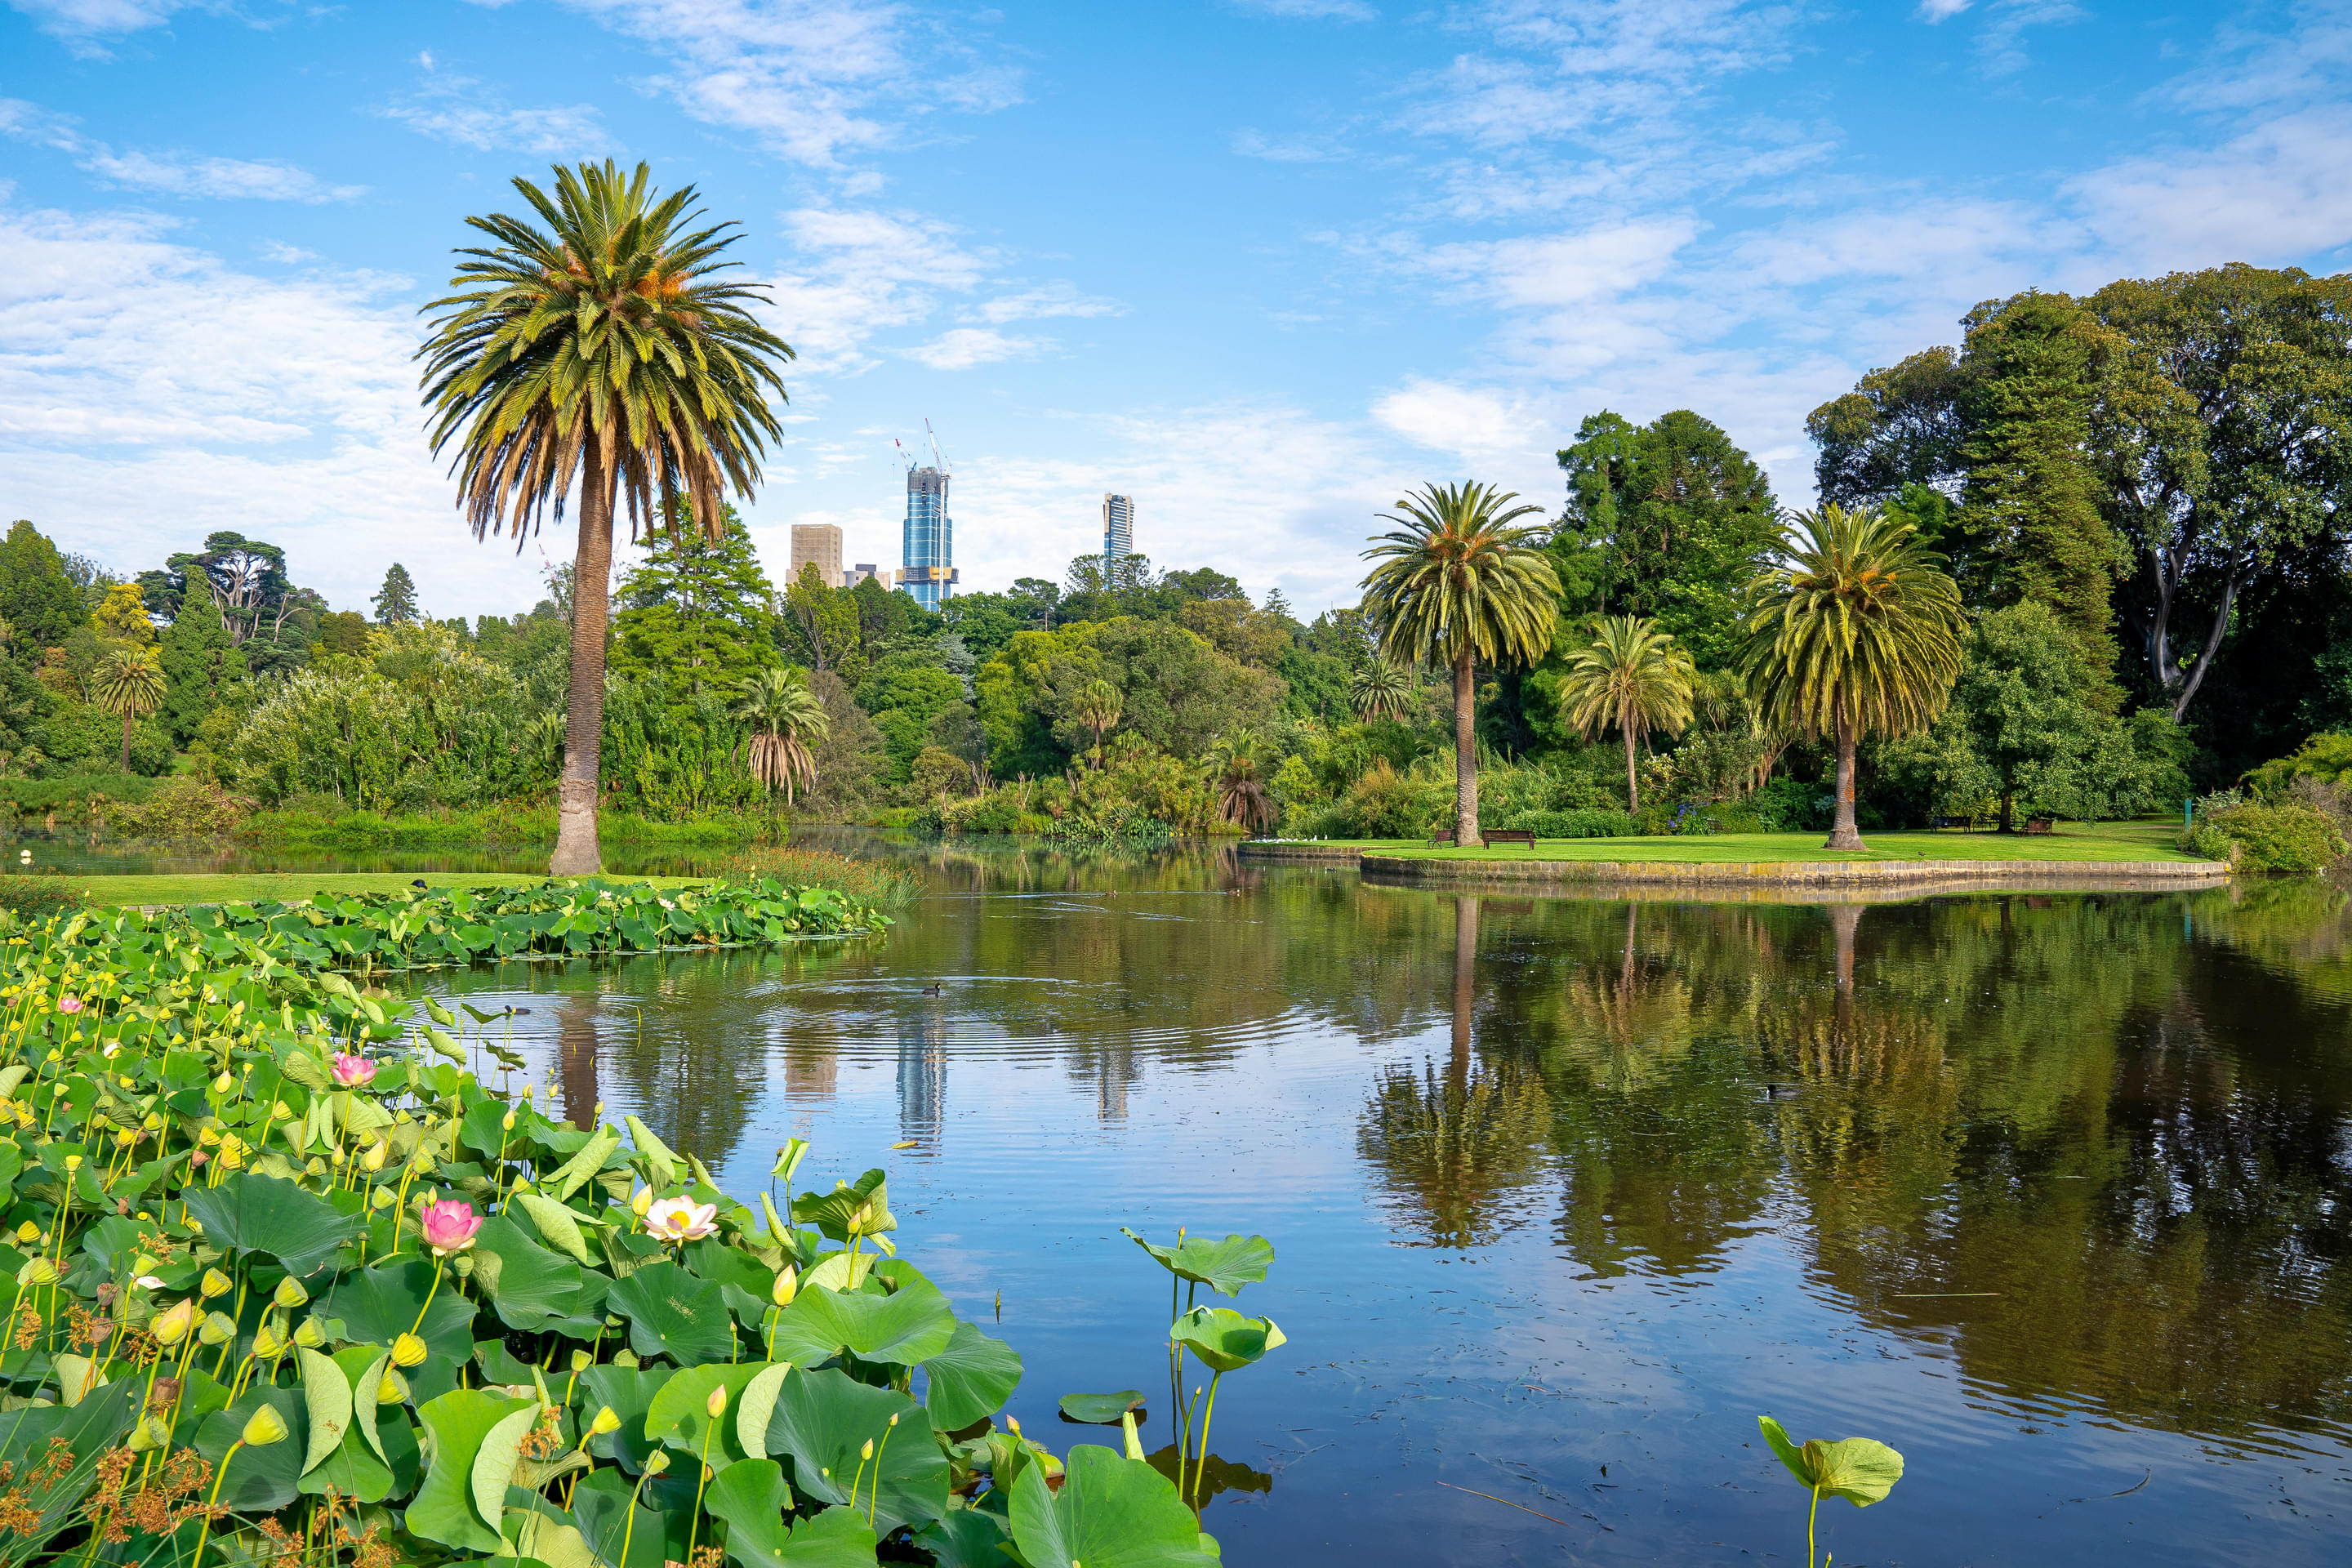 Royal Botanical Gardens Melbourne Overview